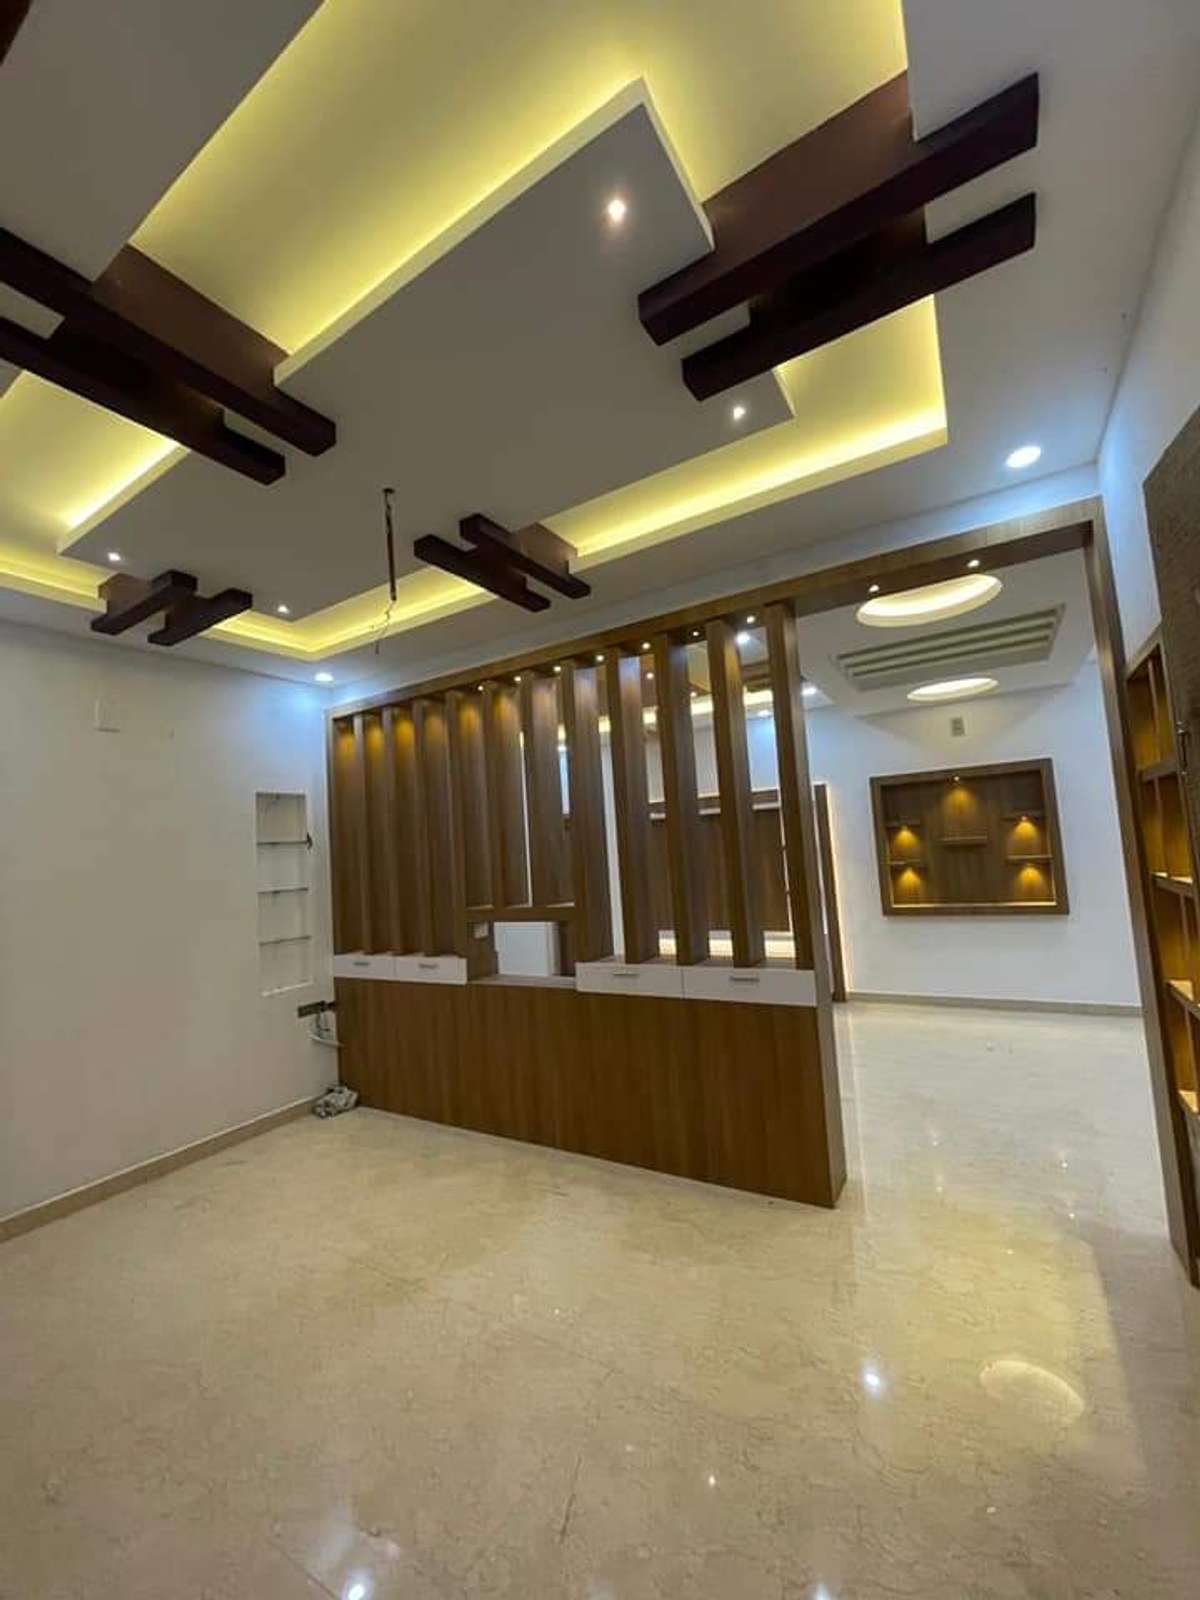 Ceiling, Lighting Designs by Carpenter ЁЯЩП рдлреЙрд▓реЛ рдХрд░реЛ рджрд┐рд▓реНрд▓реА рдХрд╛рд░рдкреЗрдВрдЯрд░ рдХреЛ, Delhi | Kolo